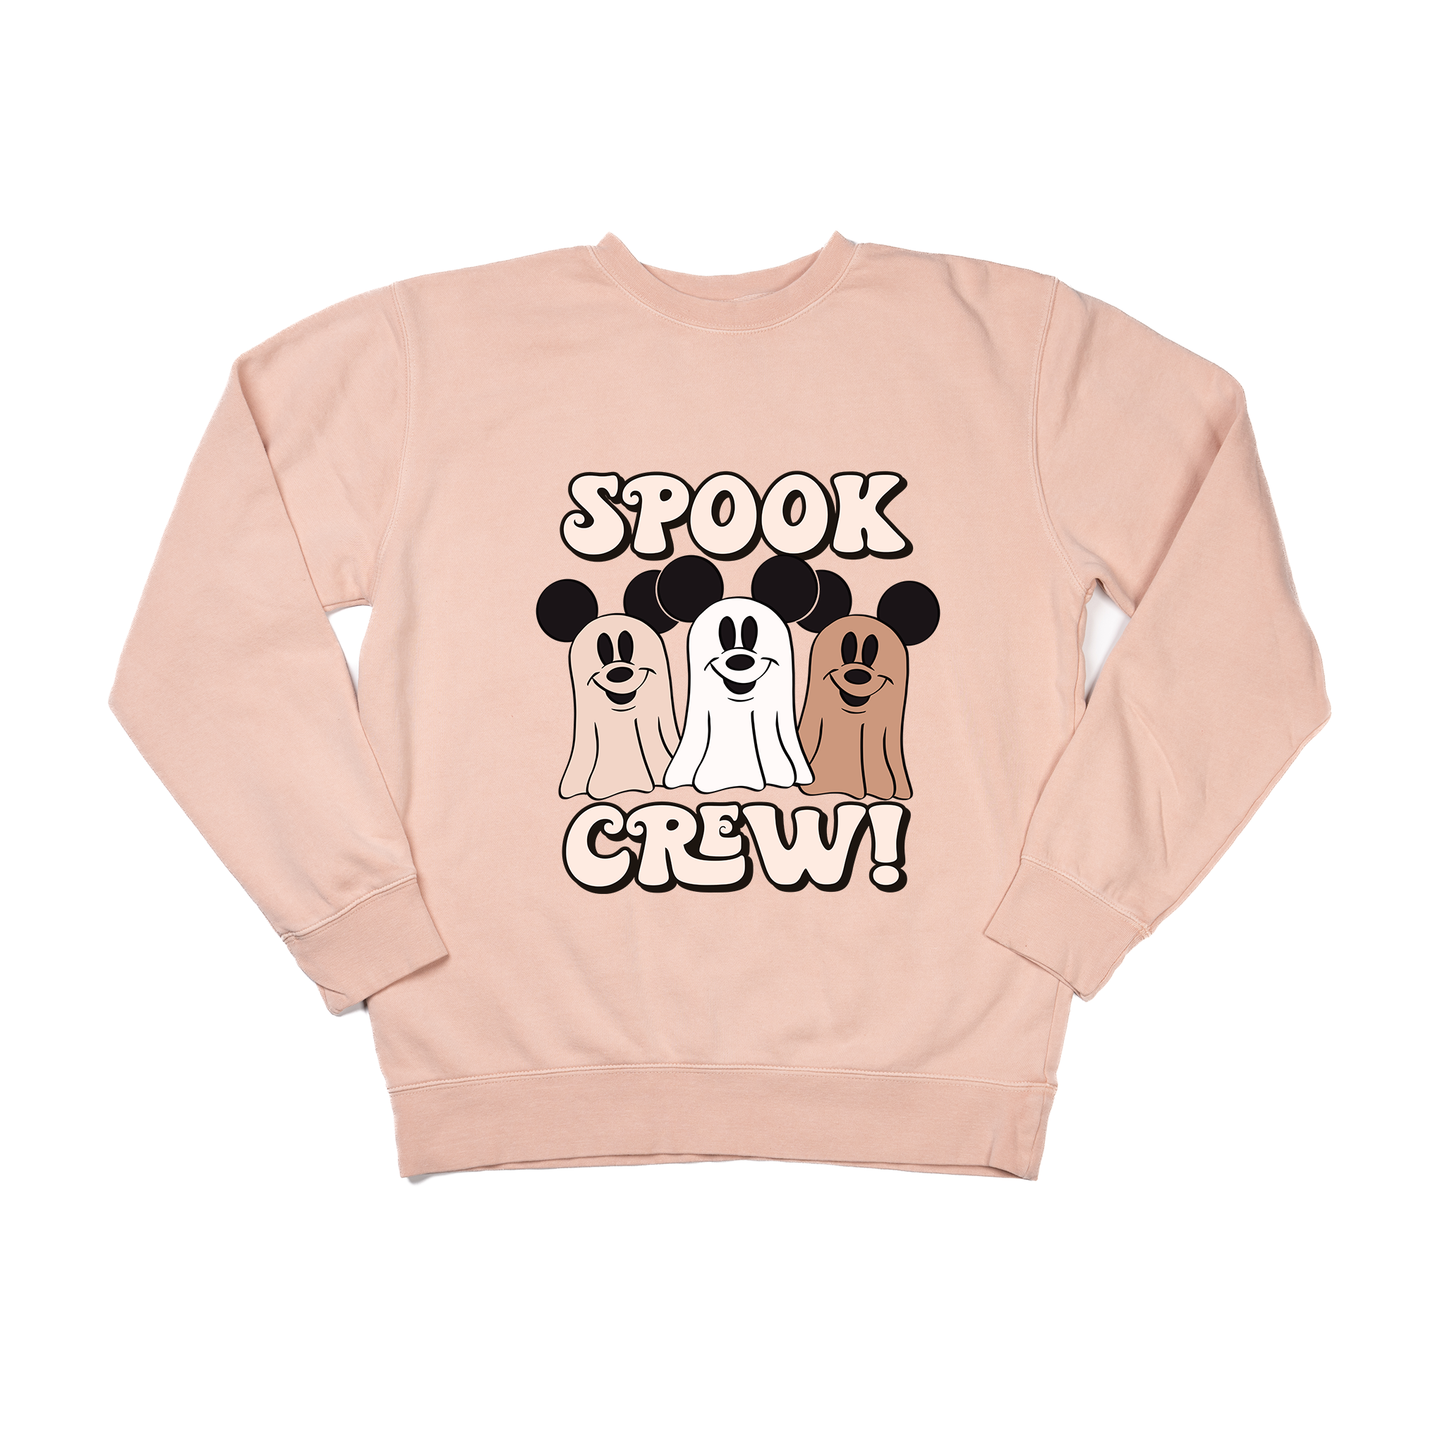 Spook Crew - Sweatshirt (Dusty Peach)